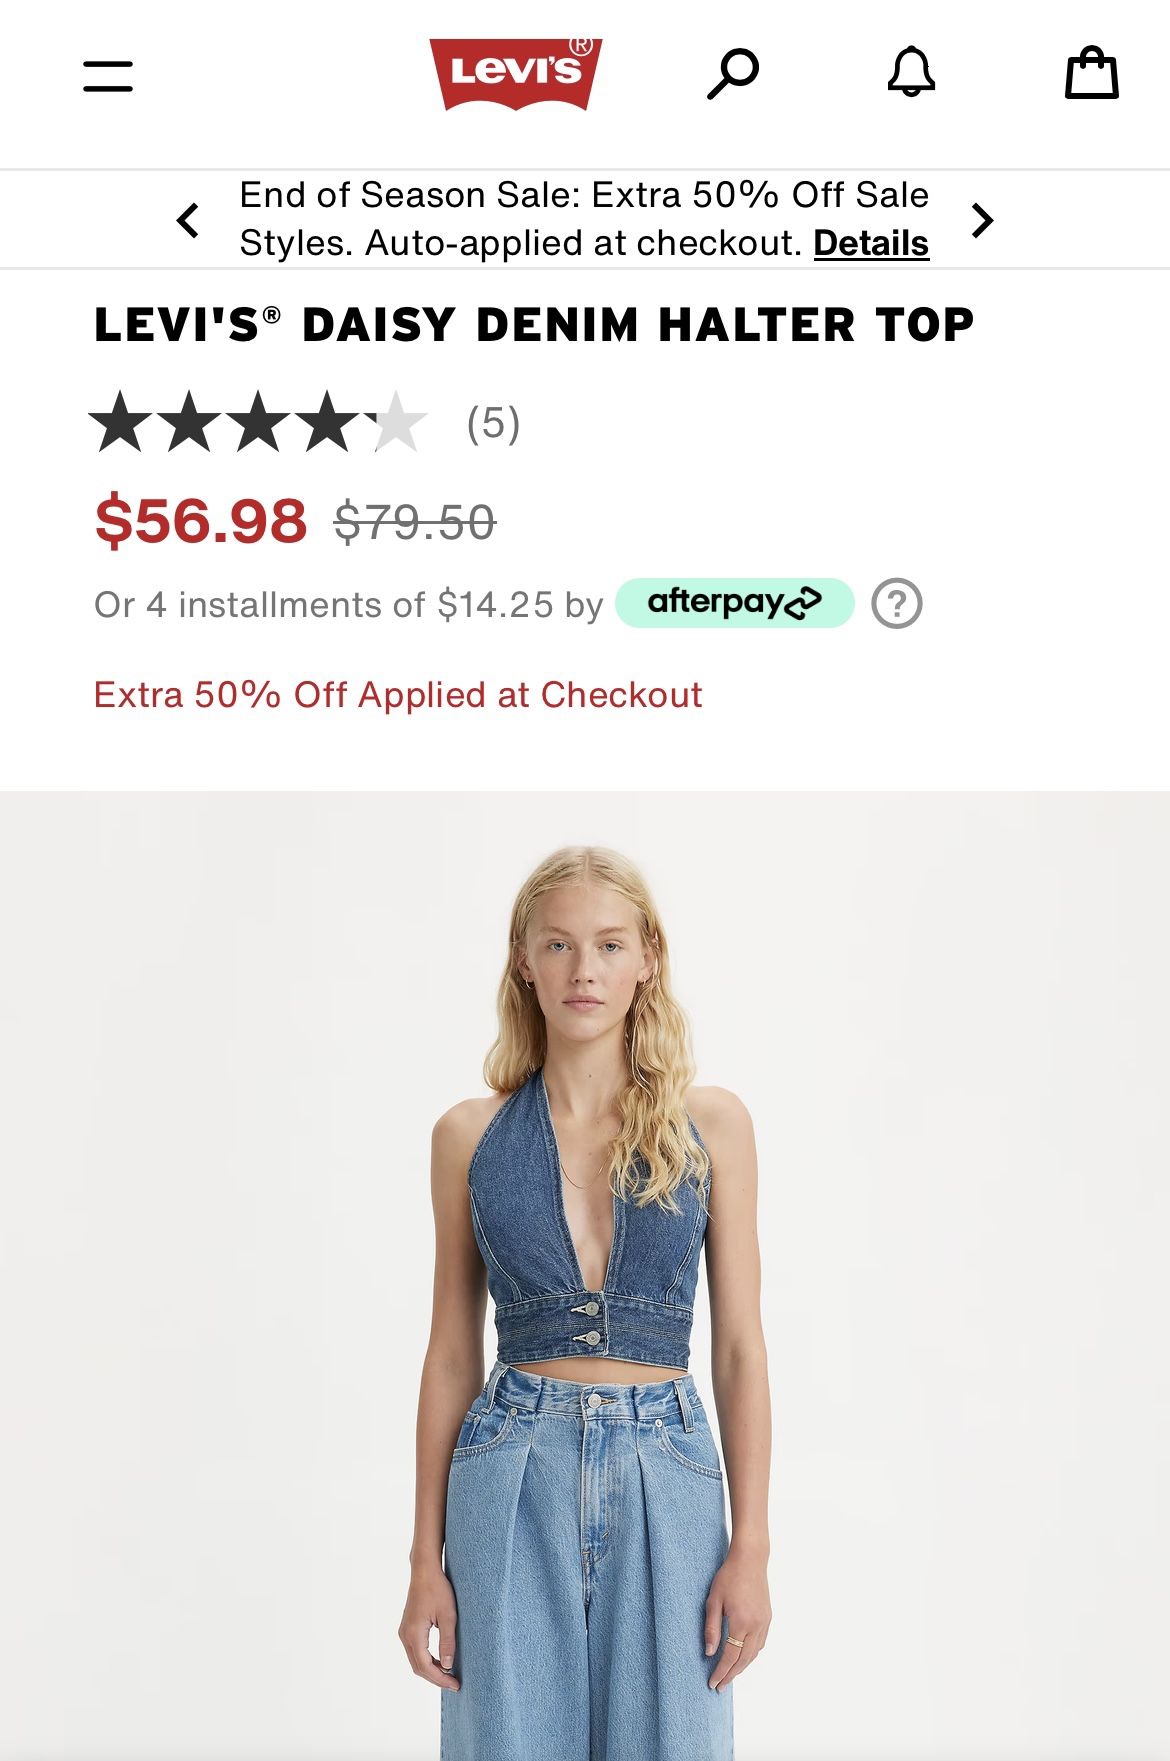 Levi’s Daisy Denim Halter Top